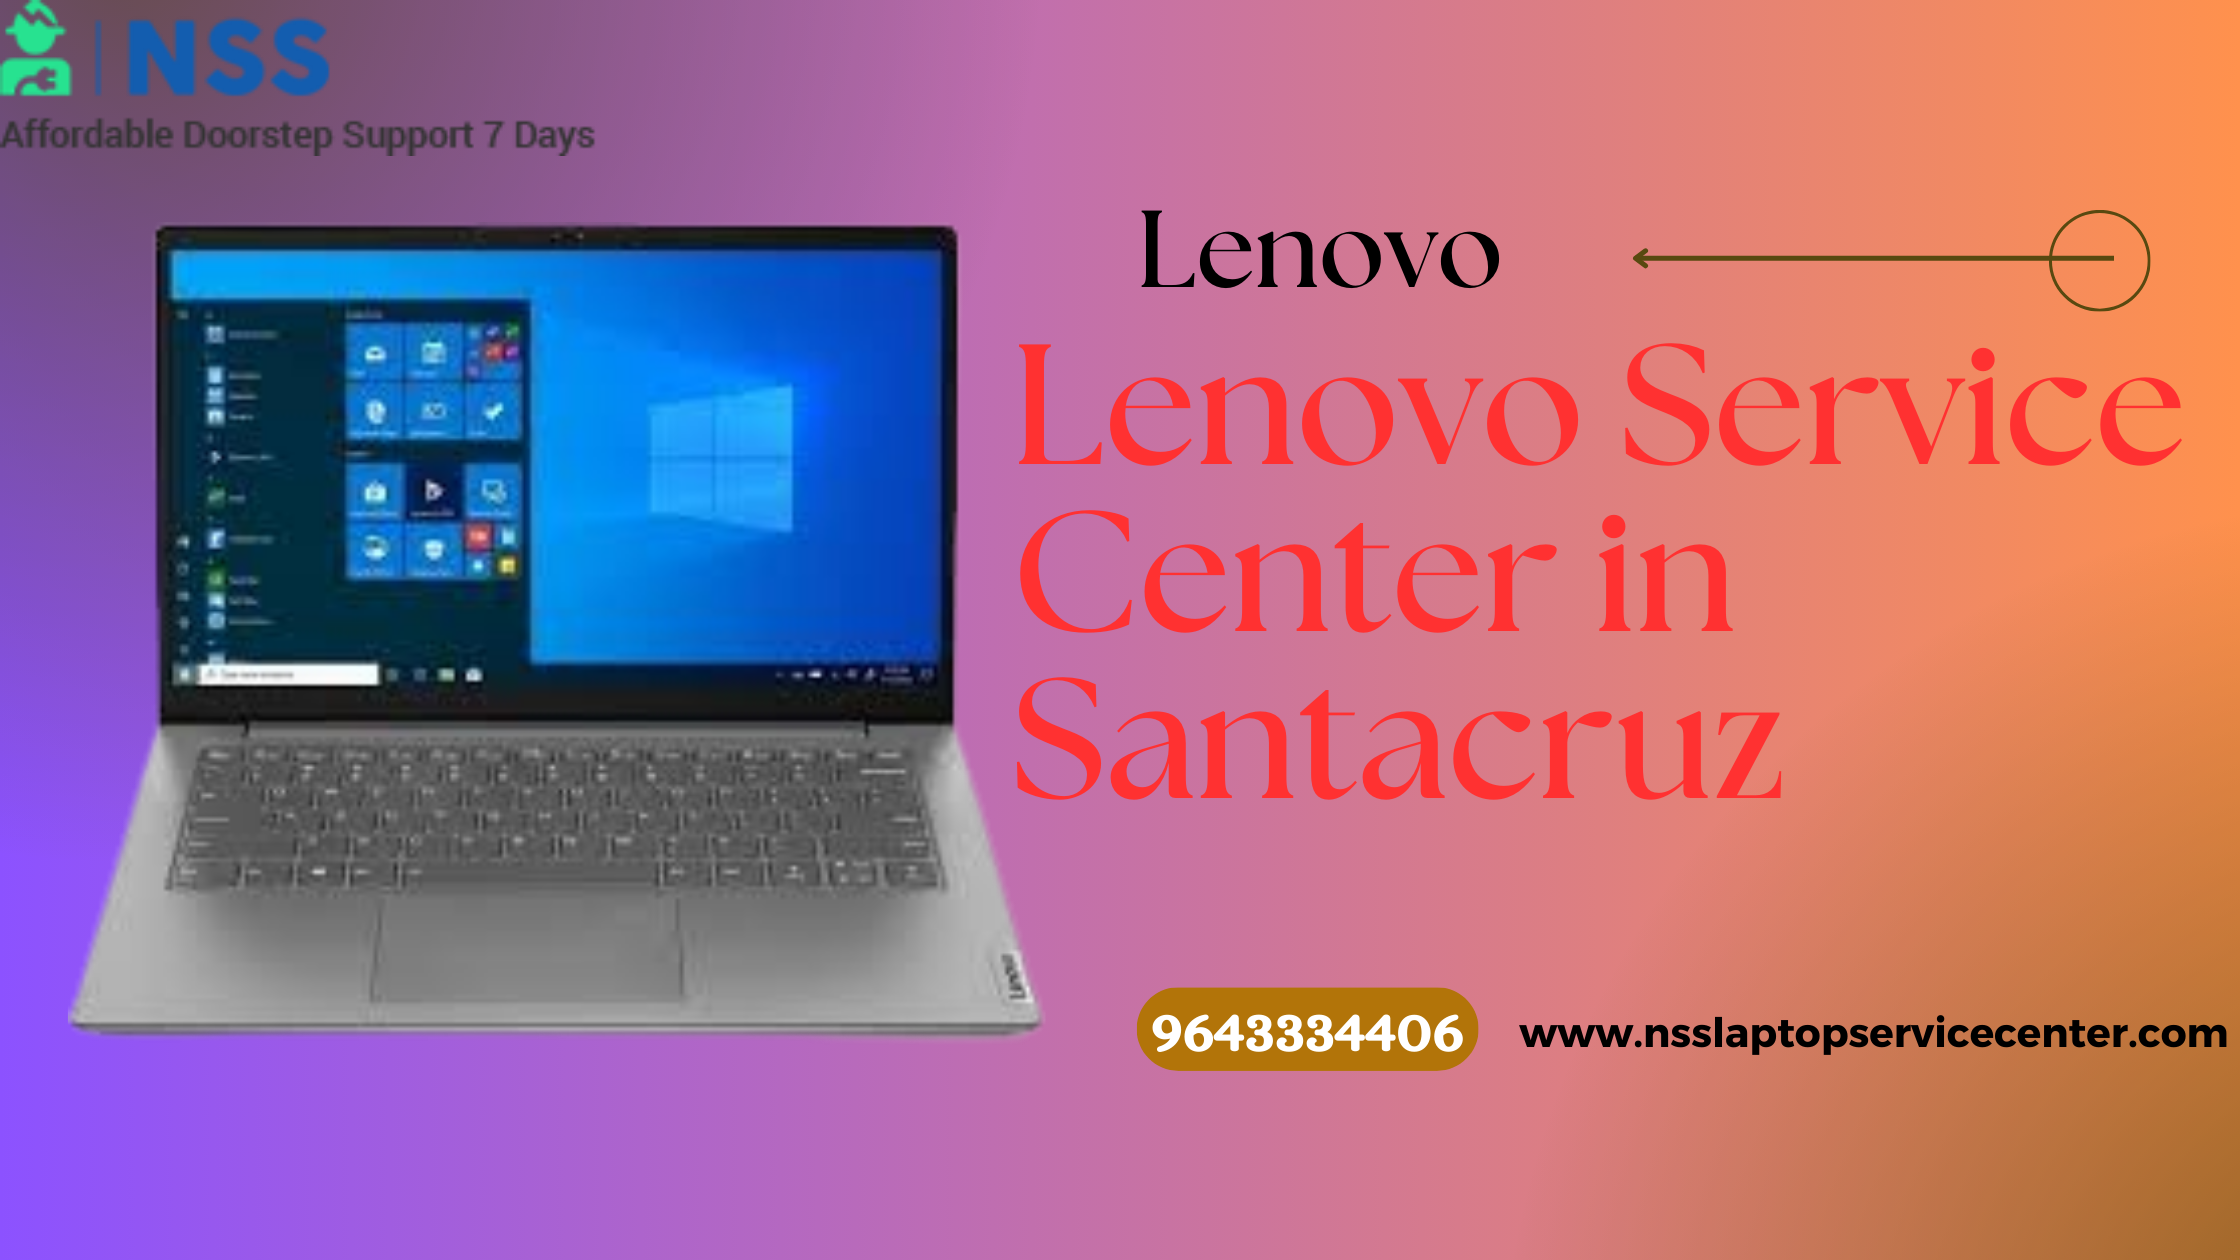 Lenovo Service Center in Santacruz Near Mumbai